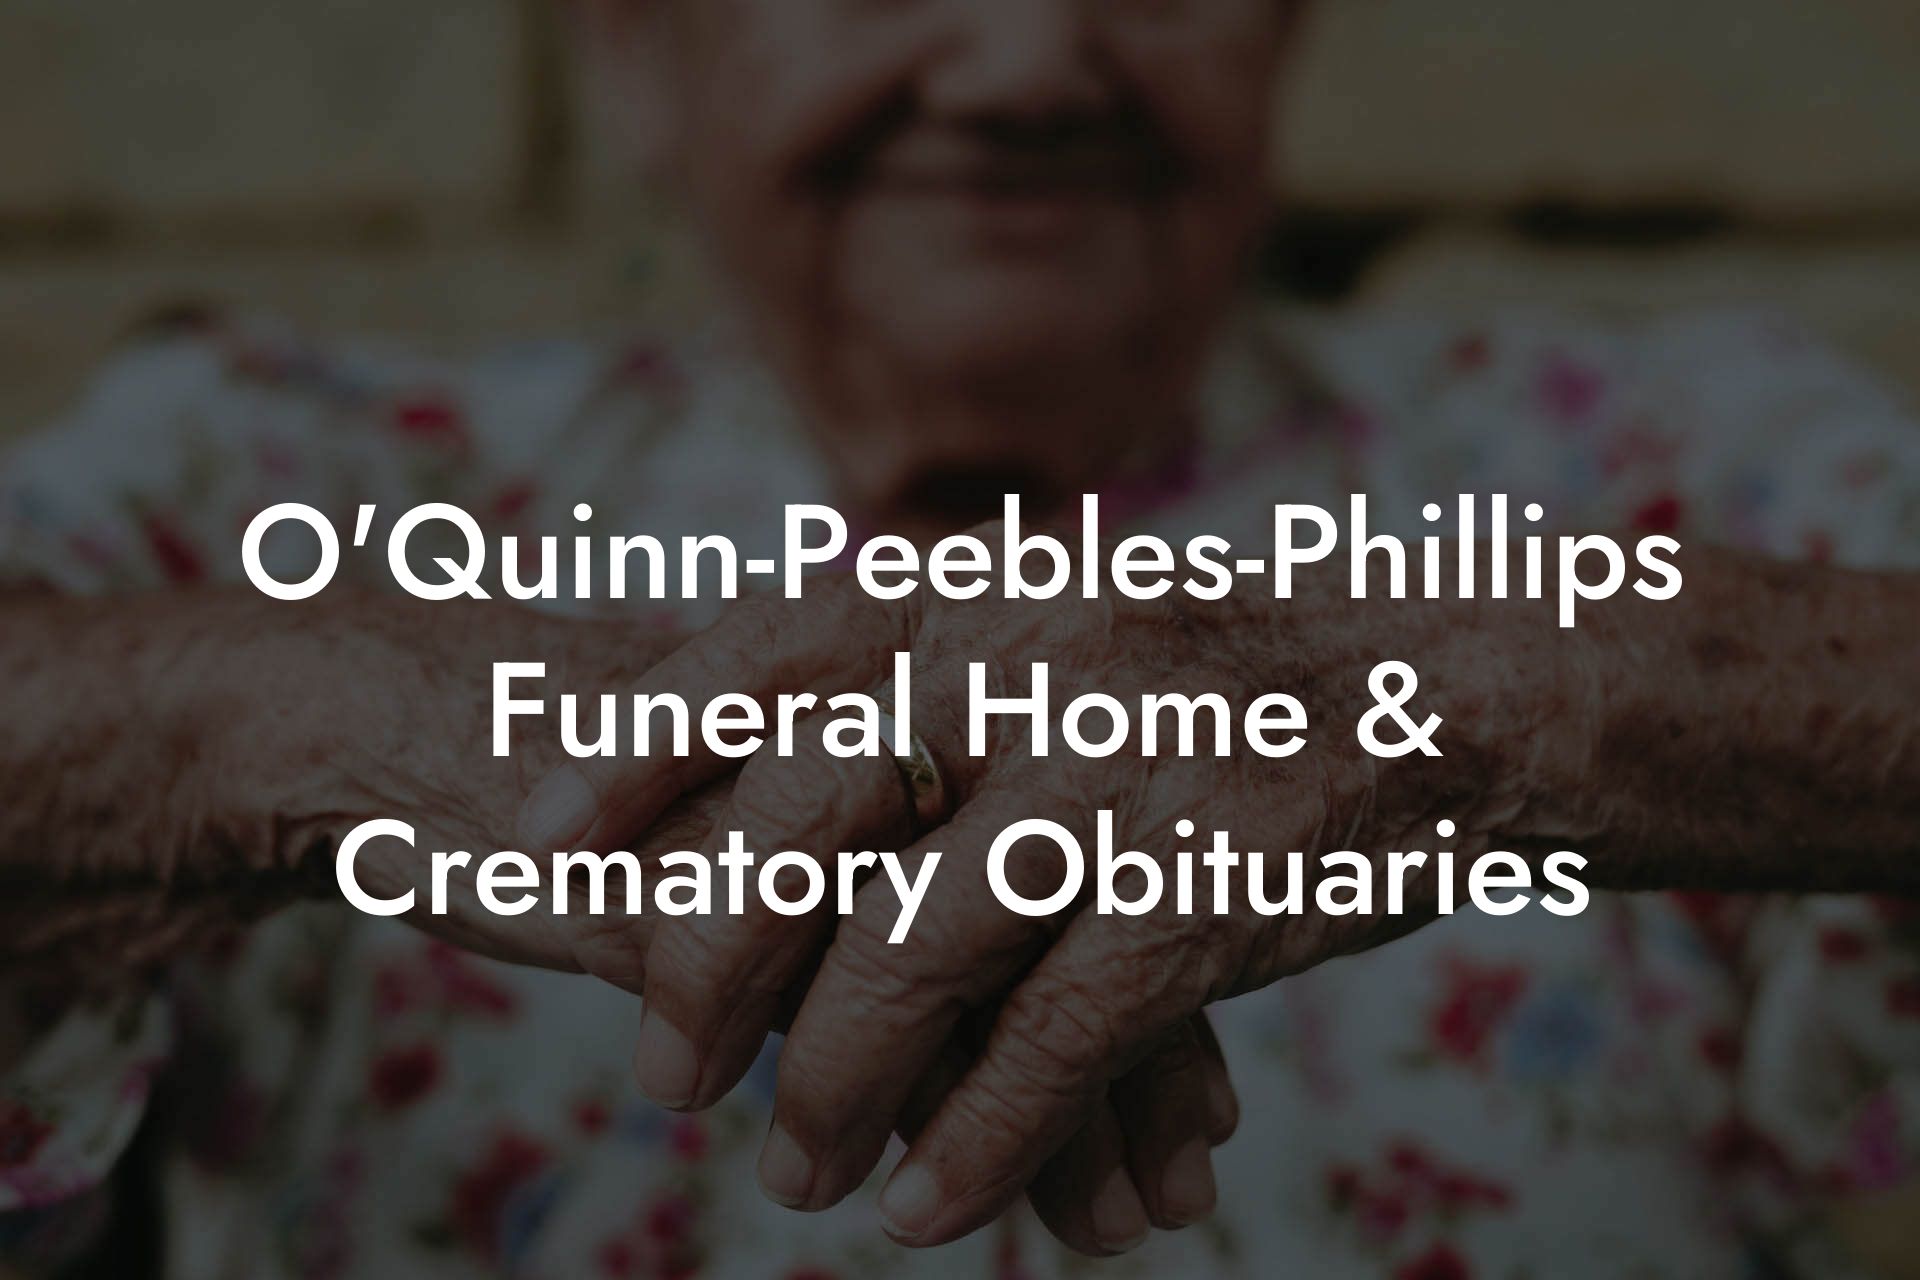 O'Quinn-Peebles-Phillips Funeral Home & Crematory Obituaries